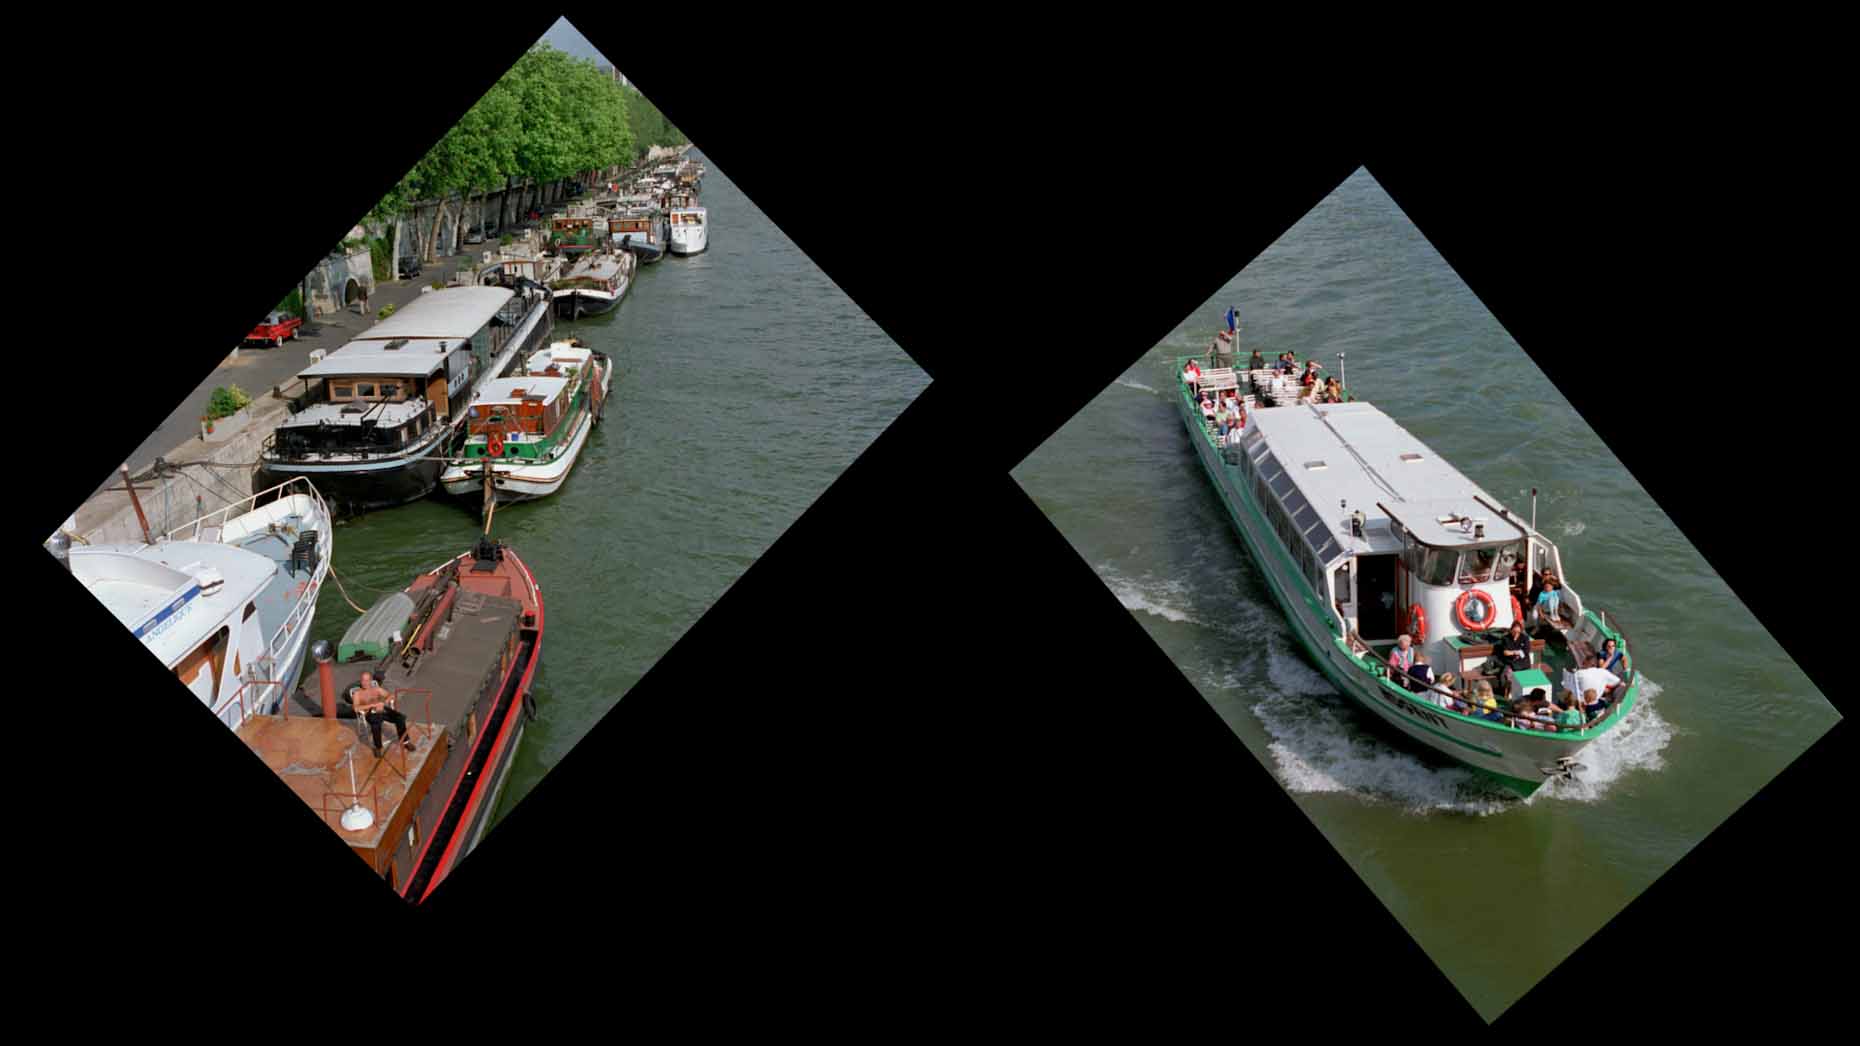 "Parisian Life",Paris France, Seine River 1997, Contemporary Art Photography,  Sequence Photography, Diptych Photography,  Color Film Photography